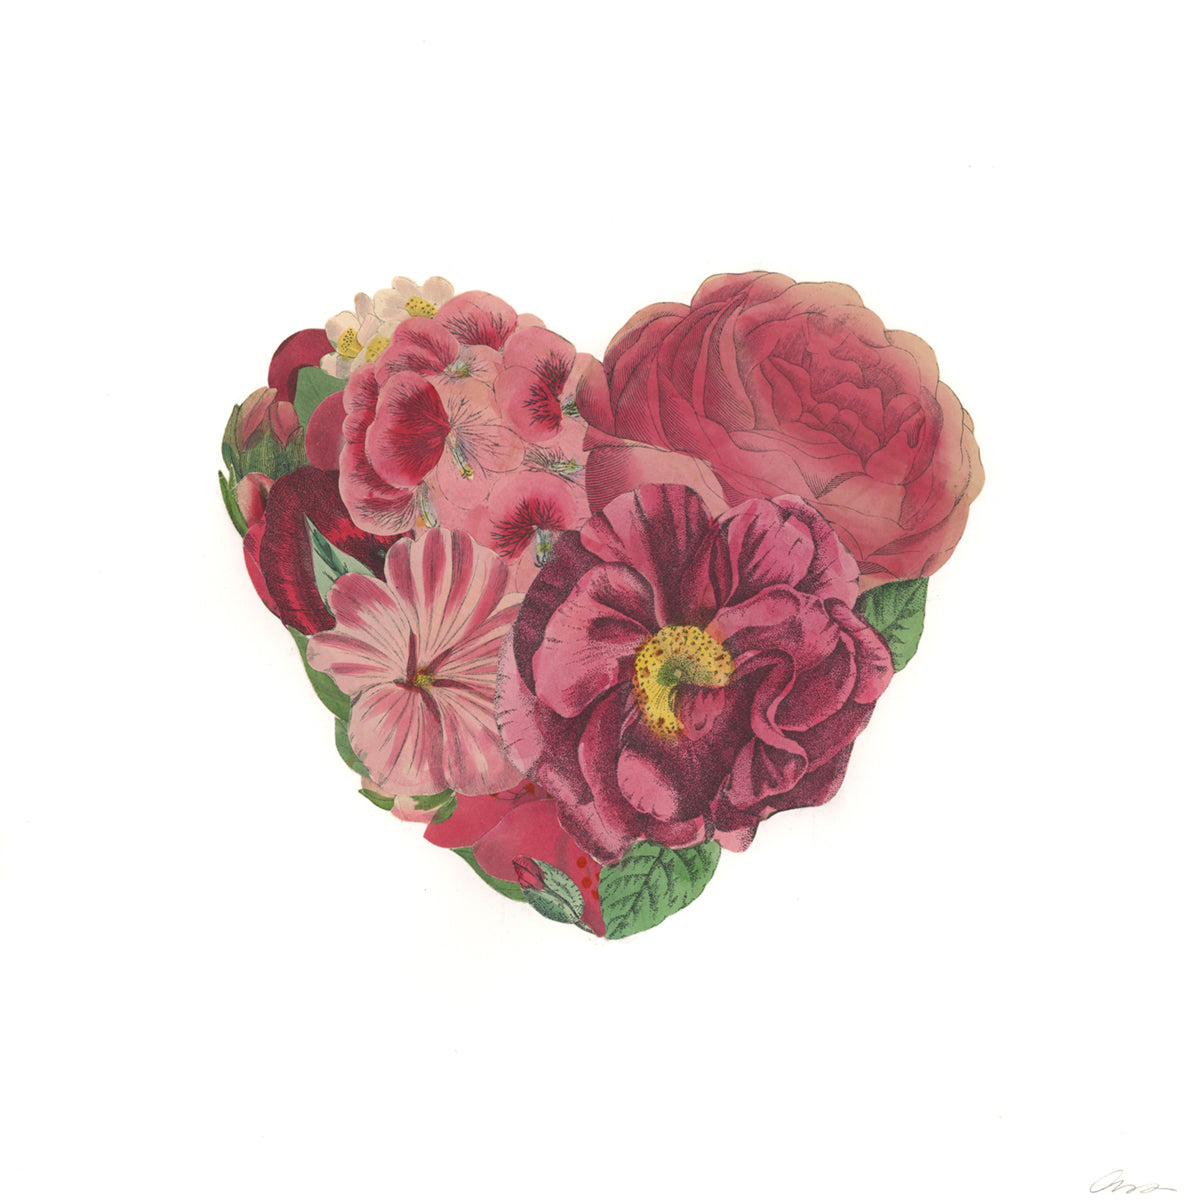 Flower Heart collage